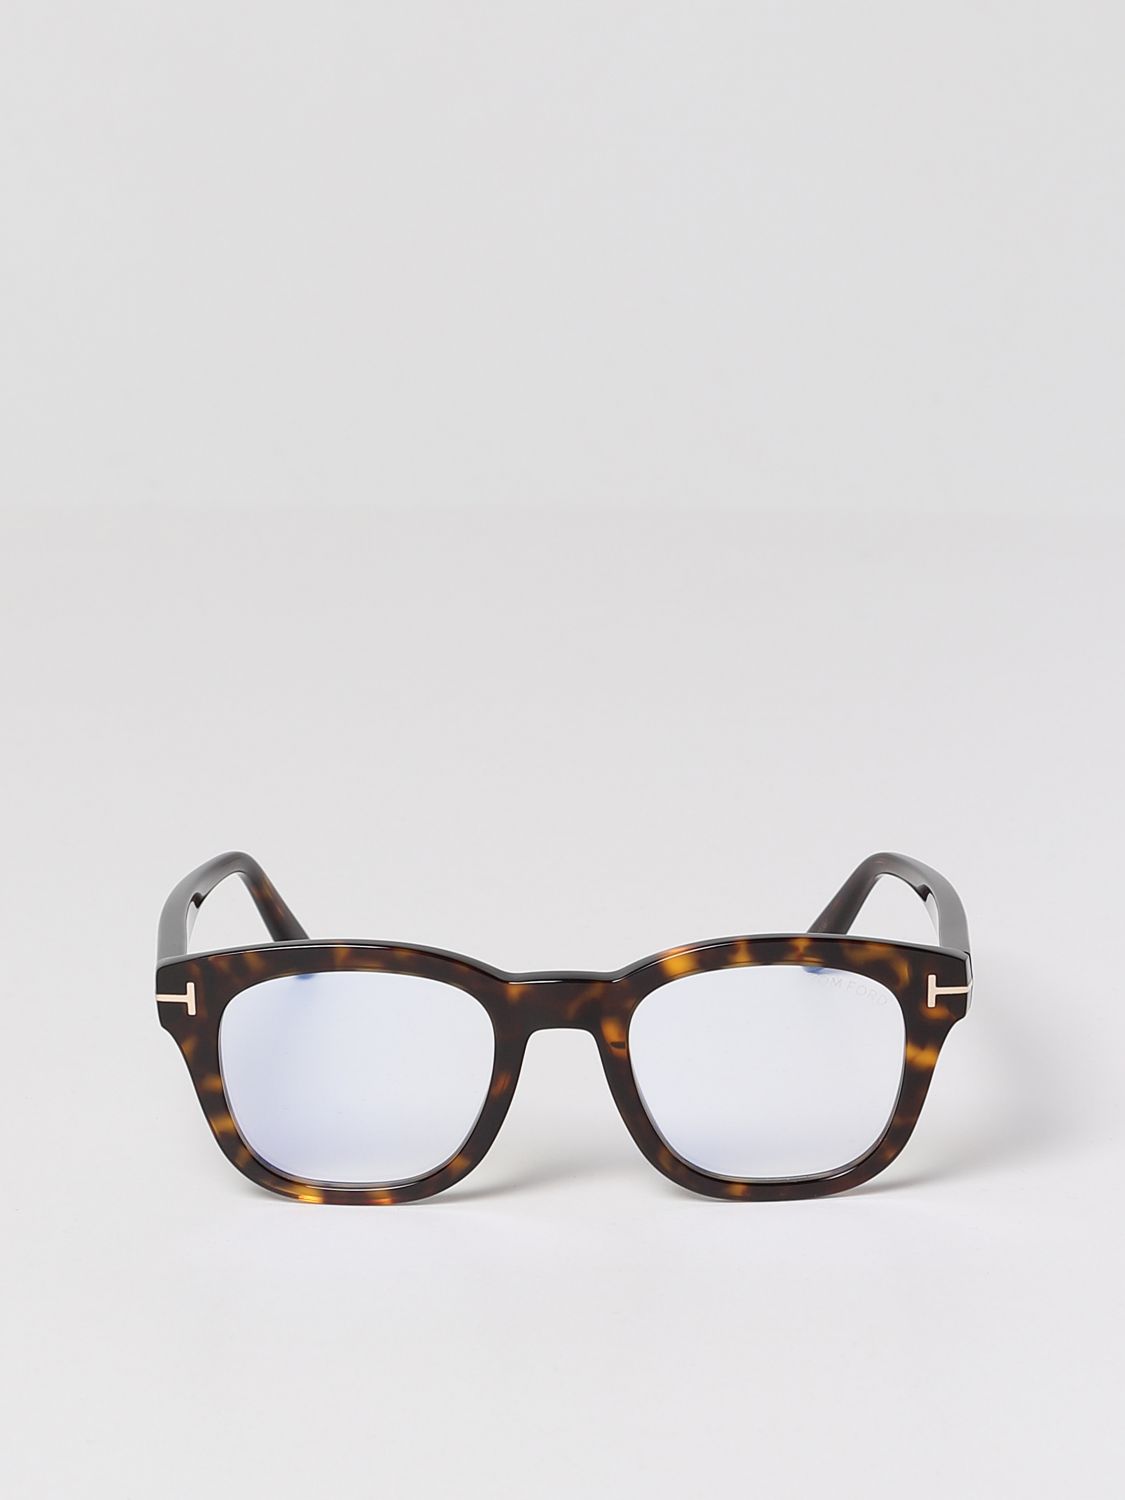 Glasses Tom Ford: TF 5542 Tom Ford eyeglasses brown 2